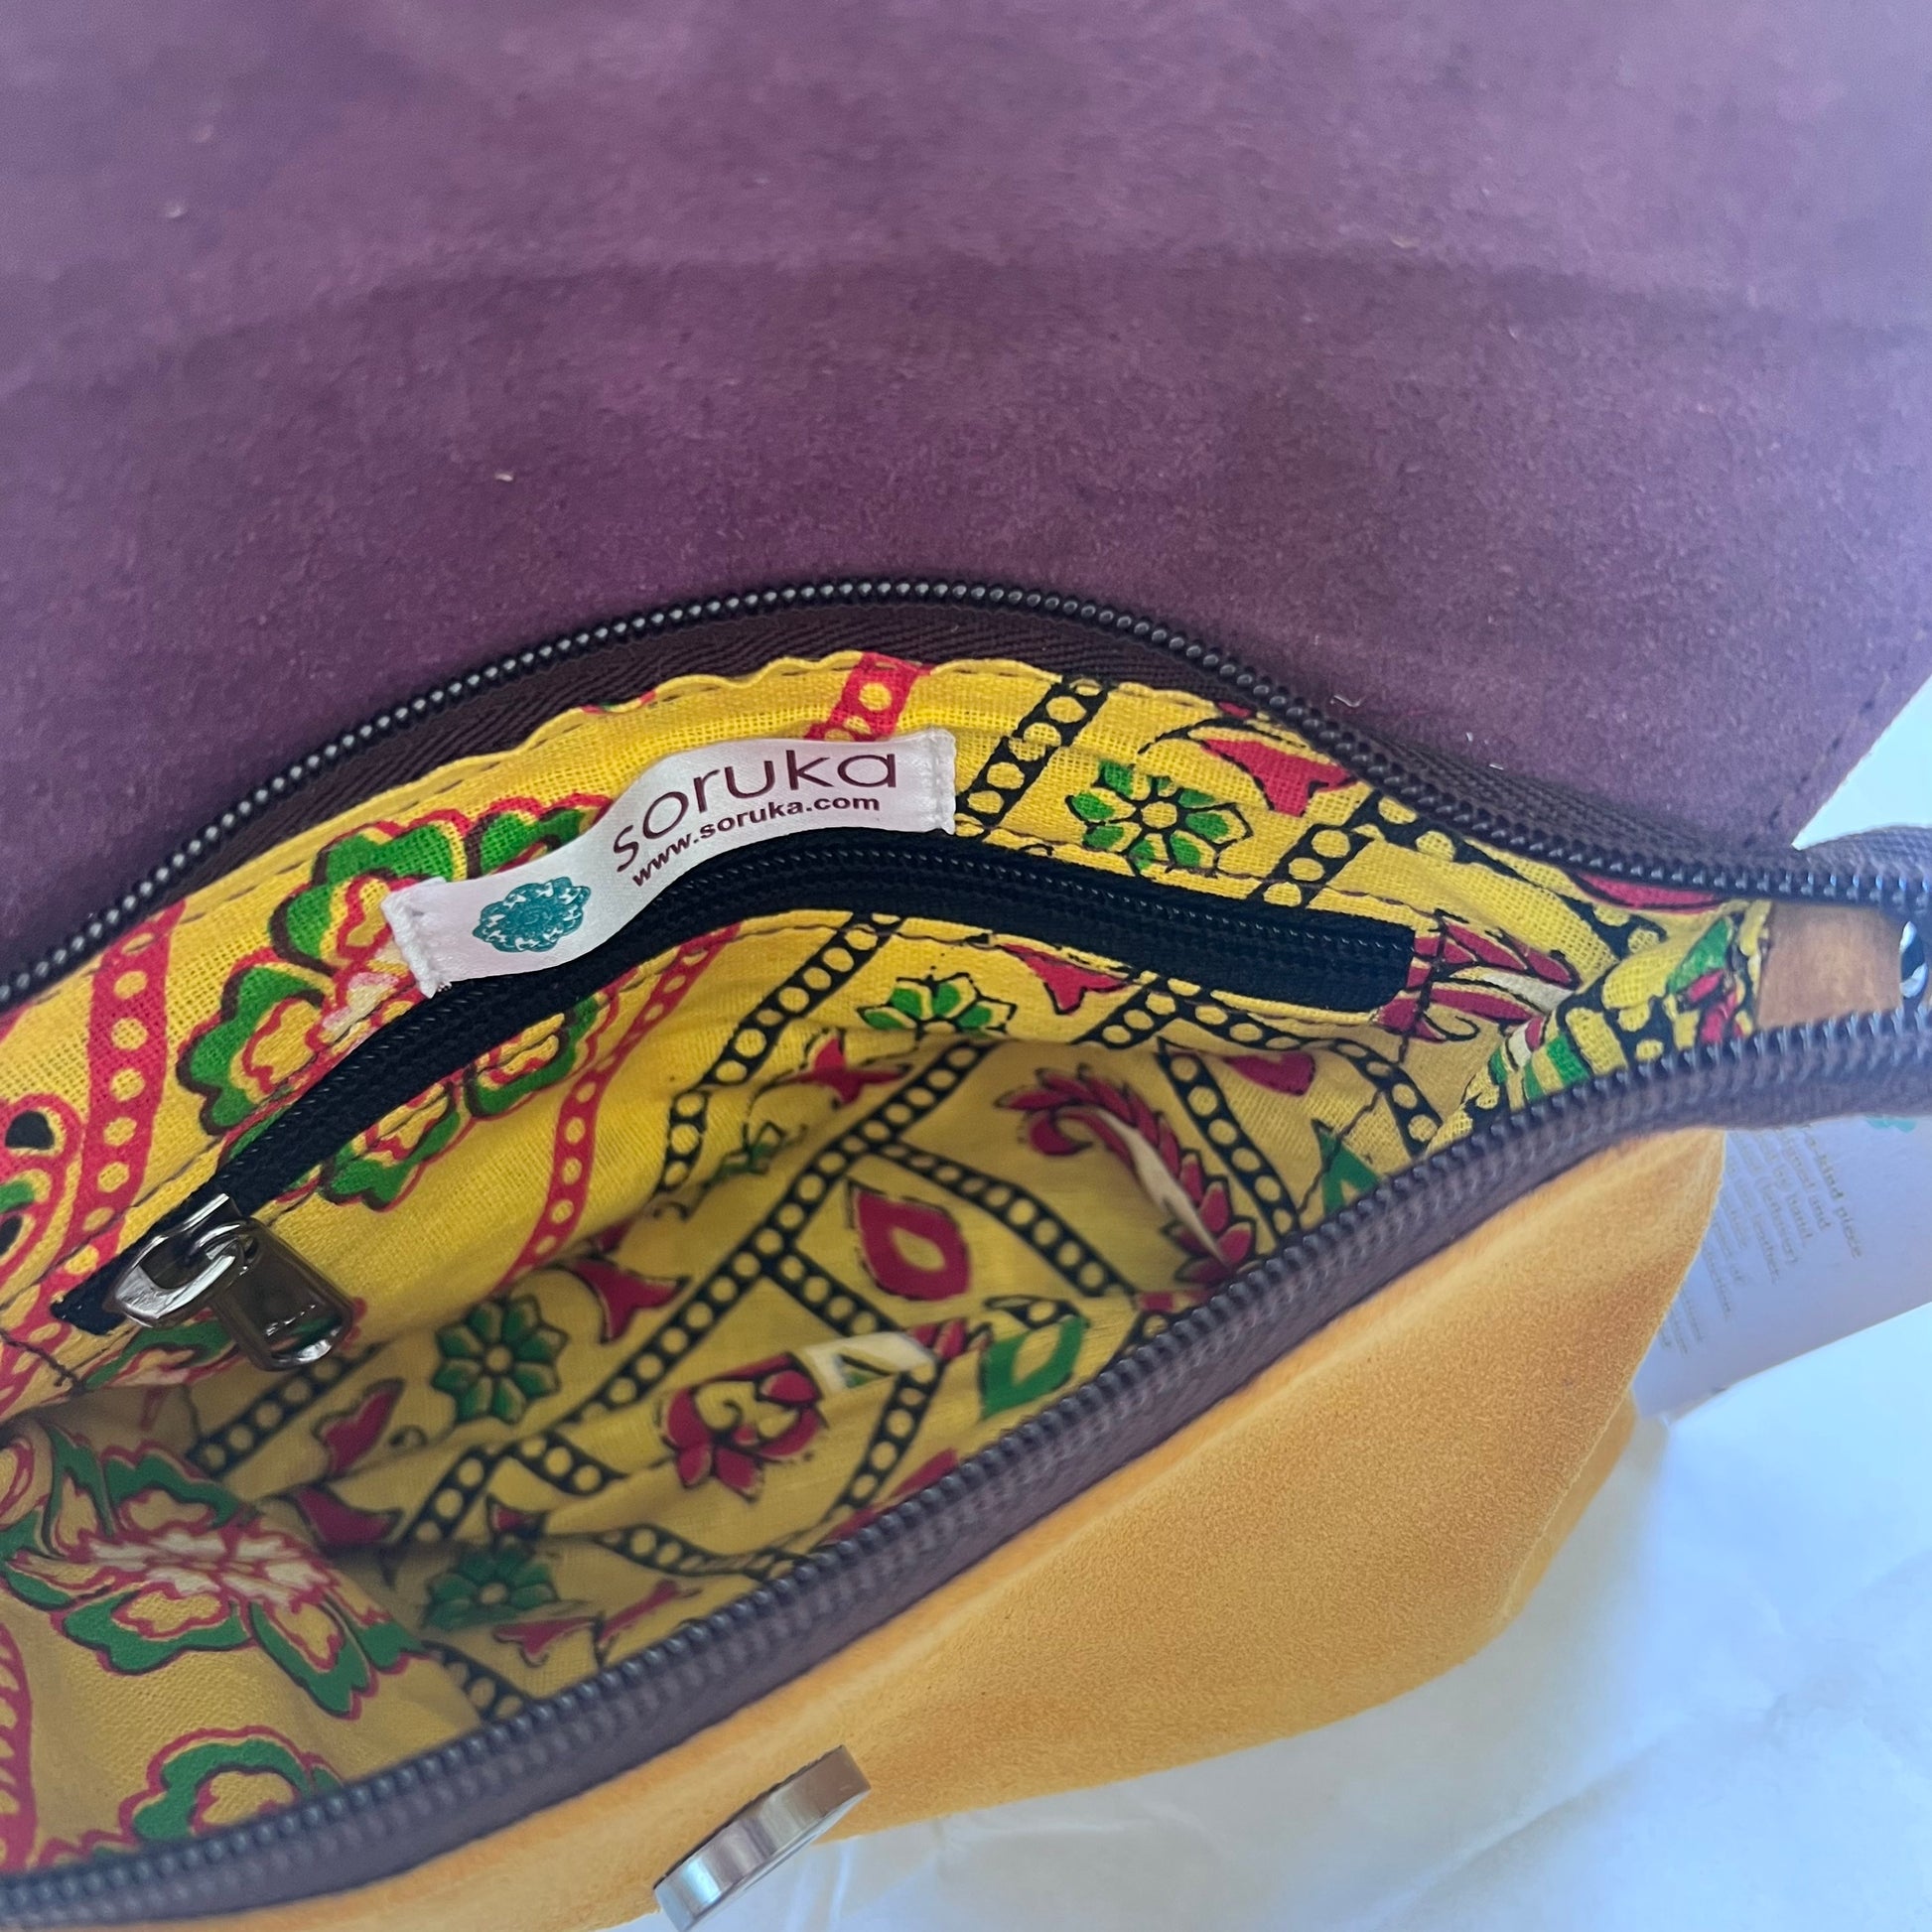 interior of bag showing inner zipper pocket.